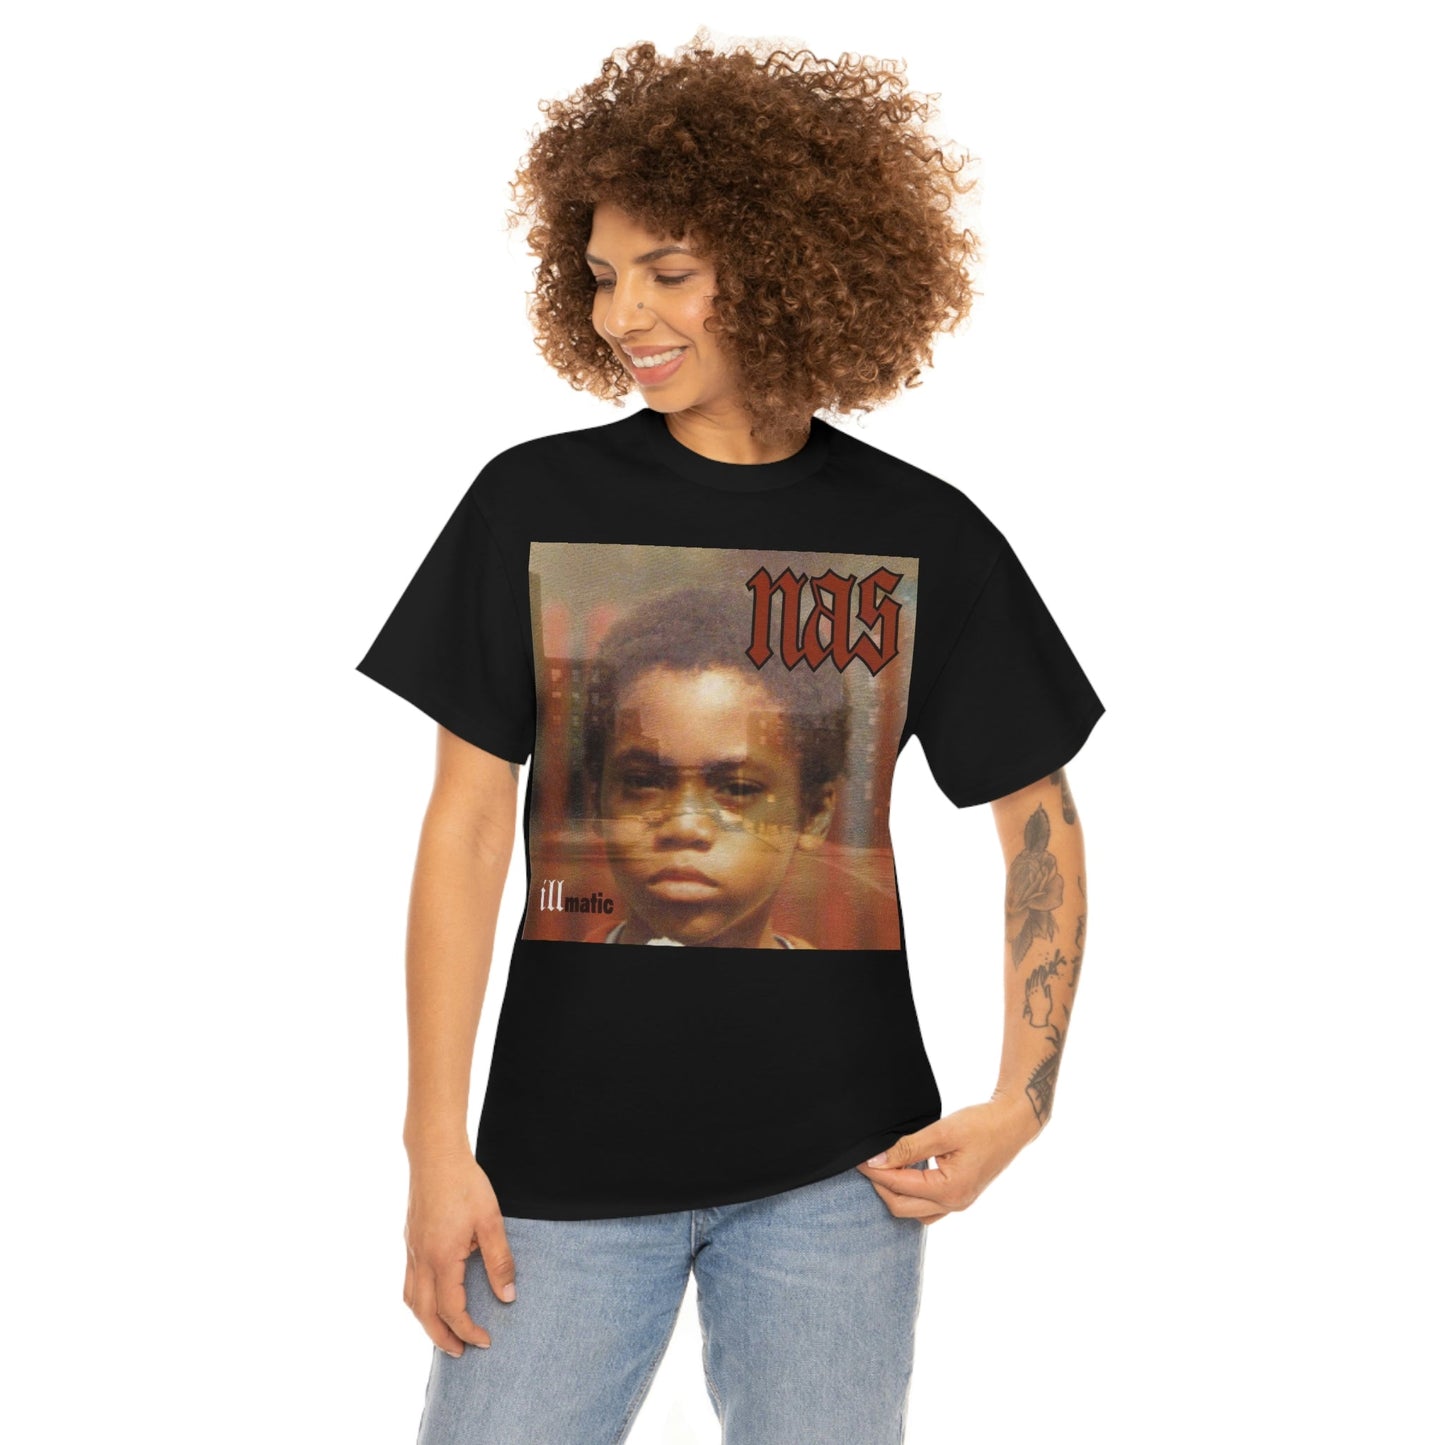 Nas Illmatic Album Cover T-Shirt - RetroTeeShop